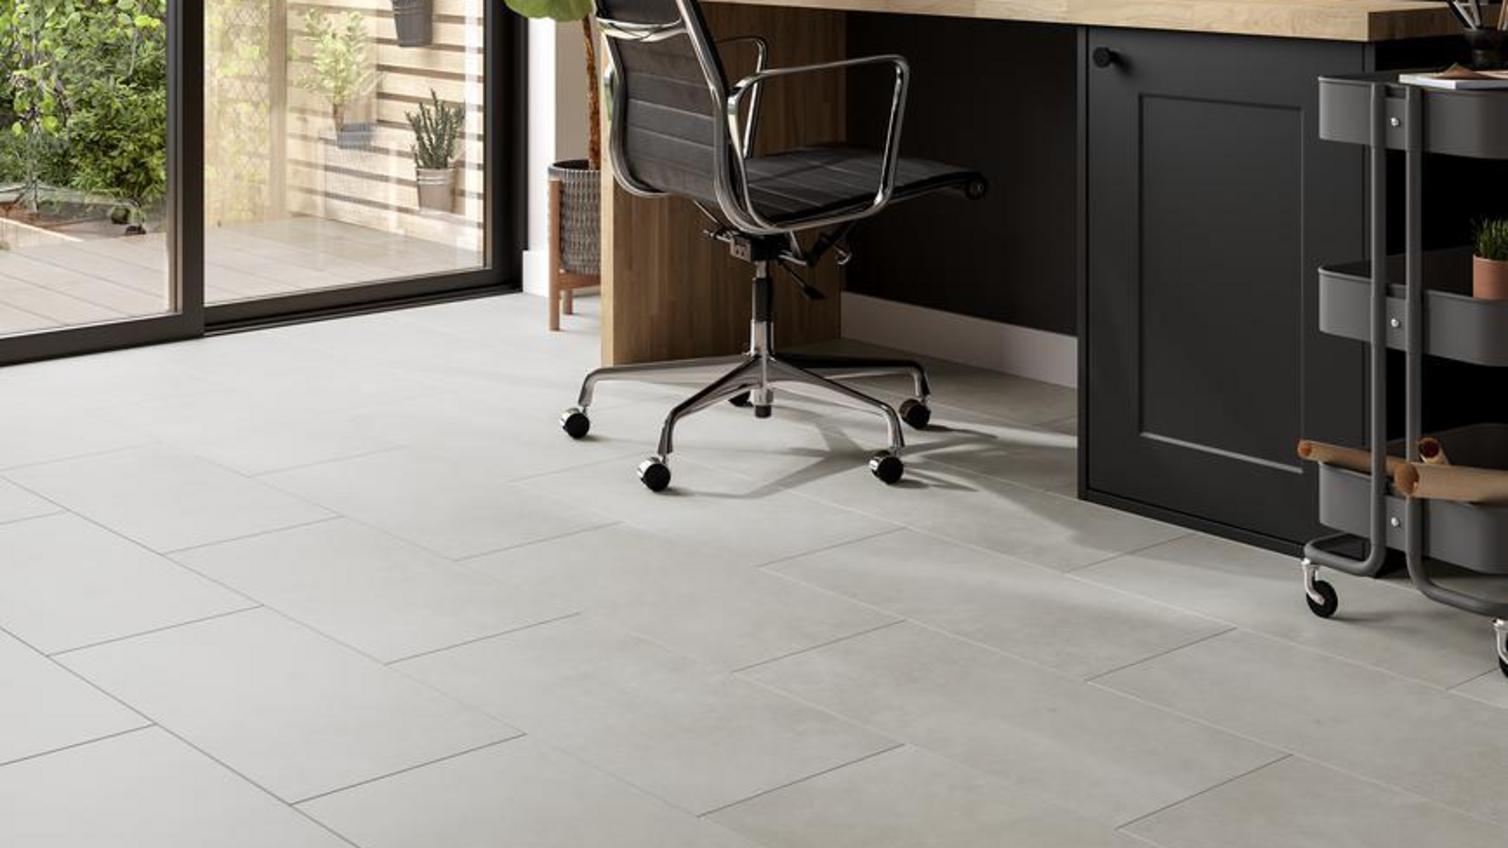 Tile flooring in a modern home office room